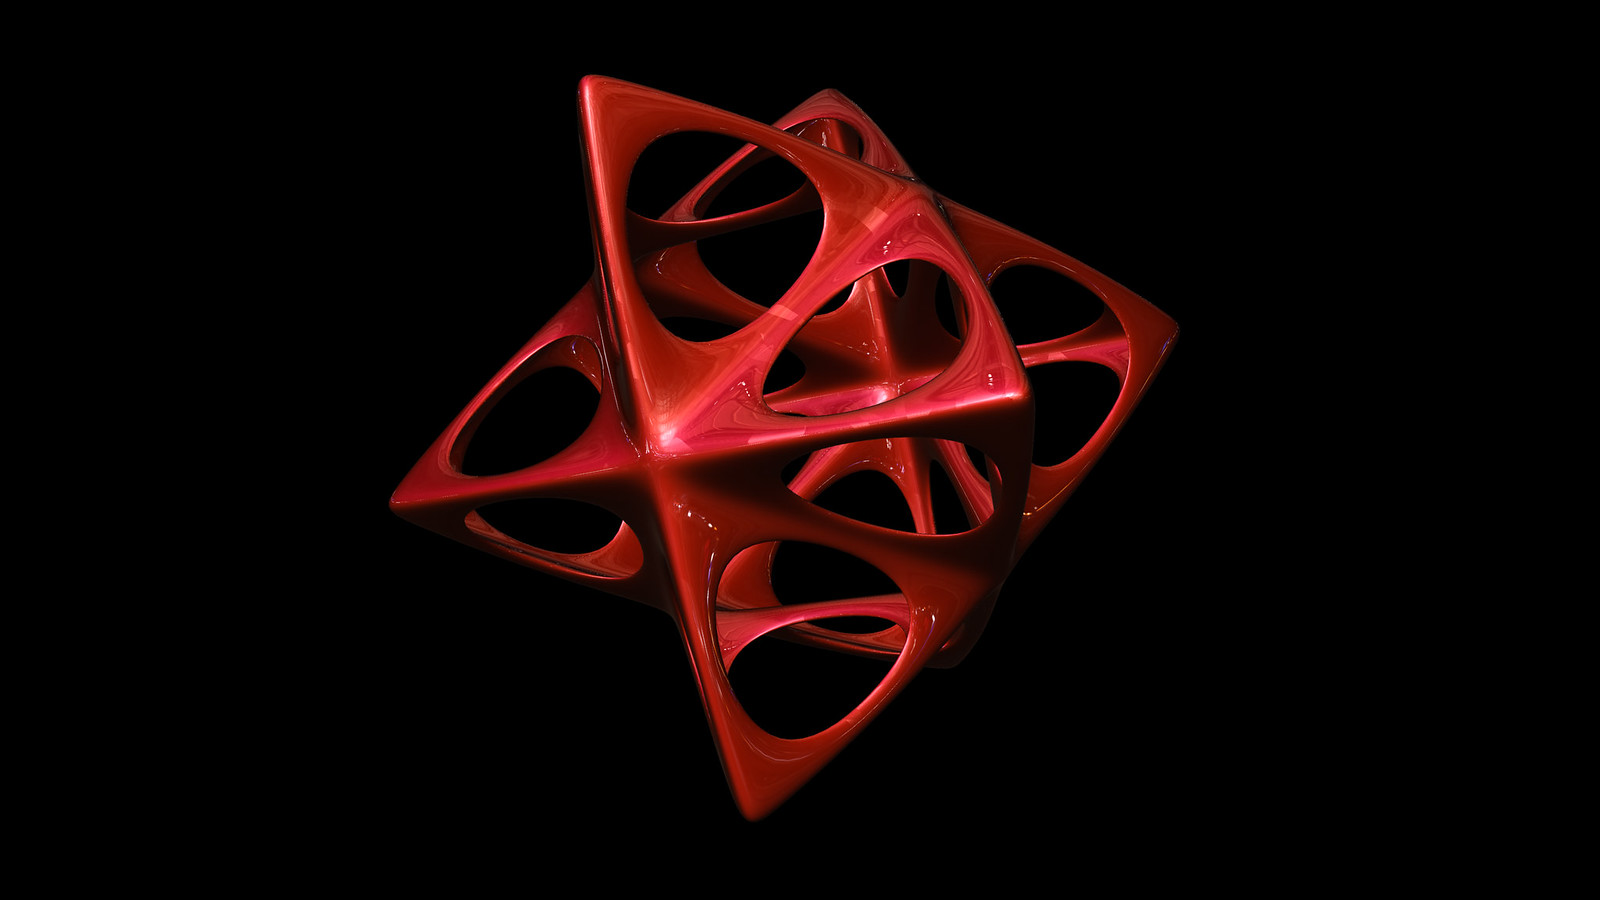 octahedron spiky soft